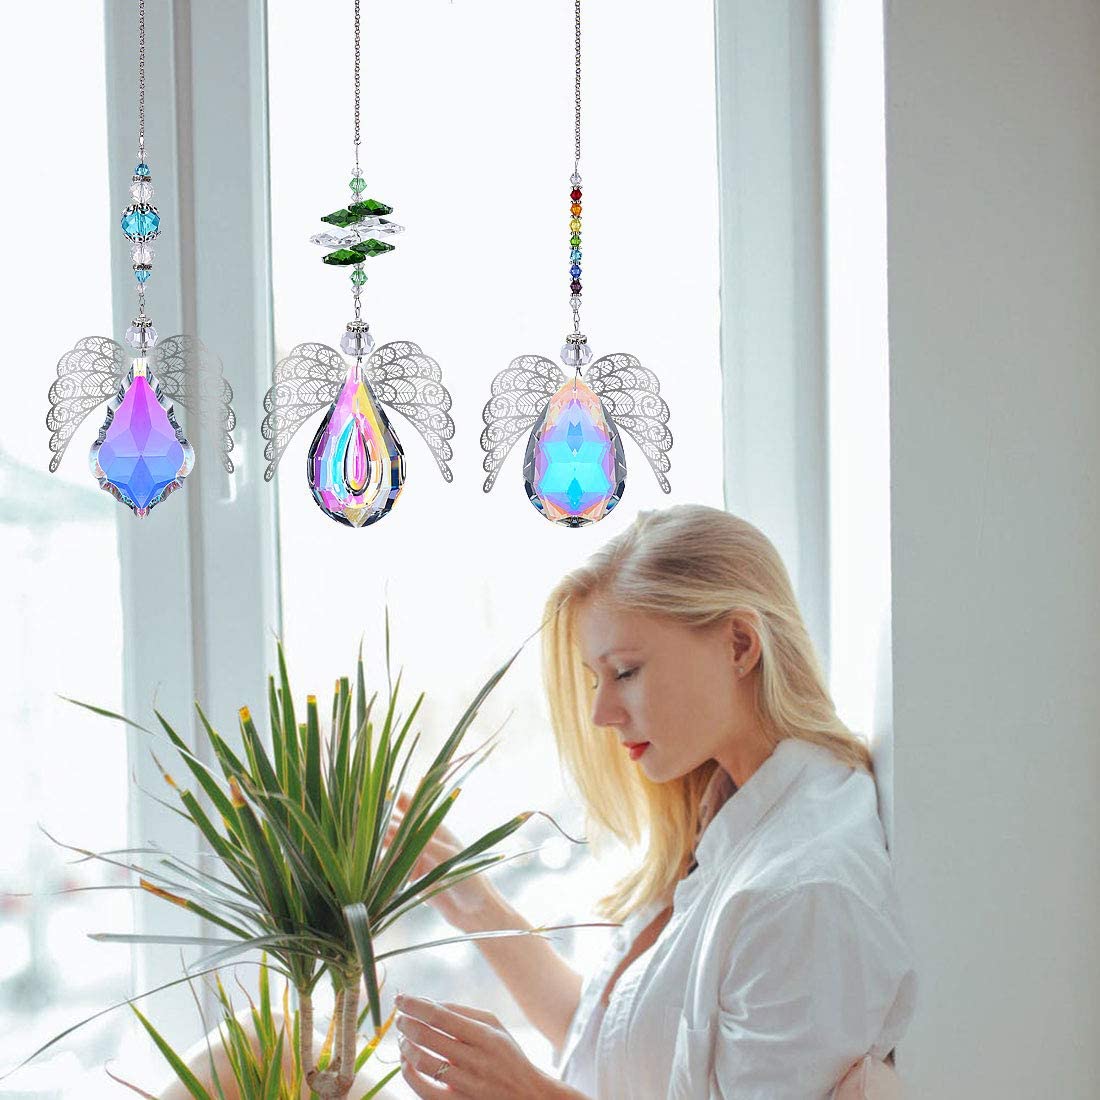 Metal Angel Wing Pendant with Rainbow Crystal Prisms Suncatcher Window Home Christmas Hanging Decor,Set 3pcs